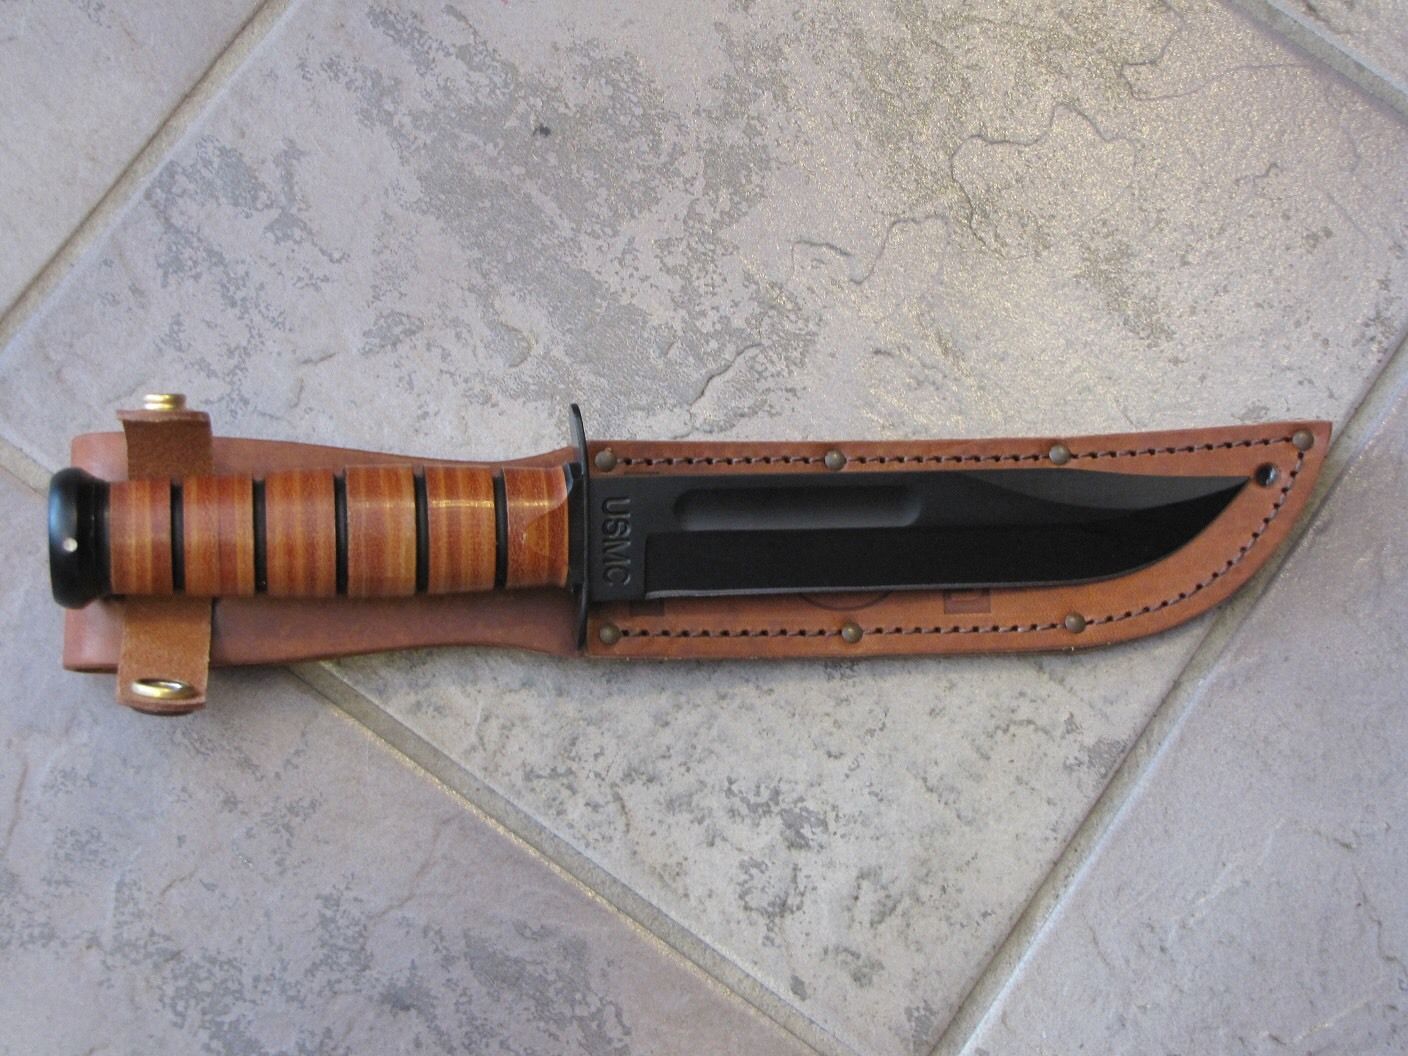 Ka Bar Us Military Fightingutility Knife Straight Edge Brown Leather